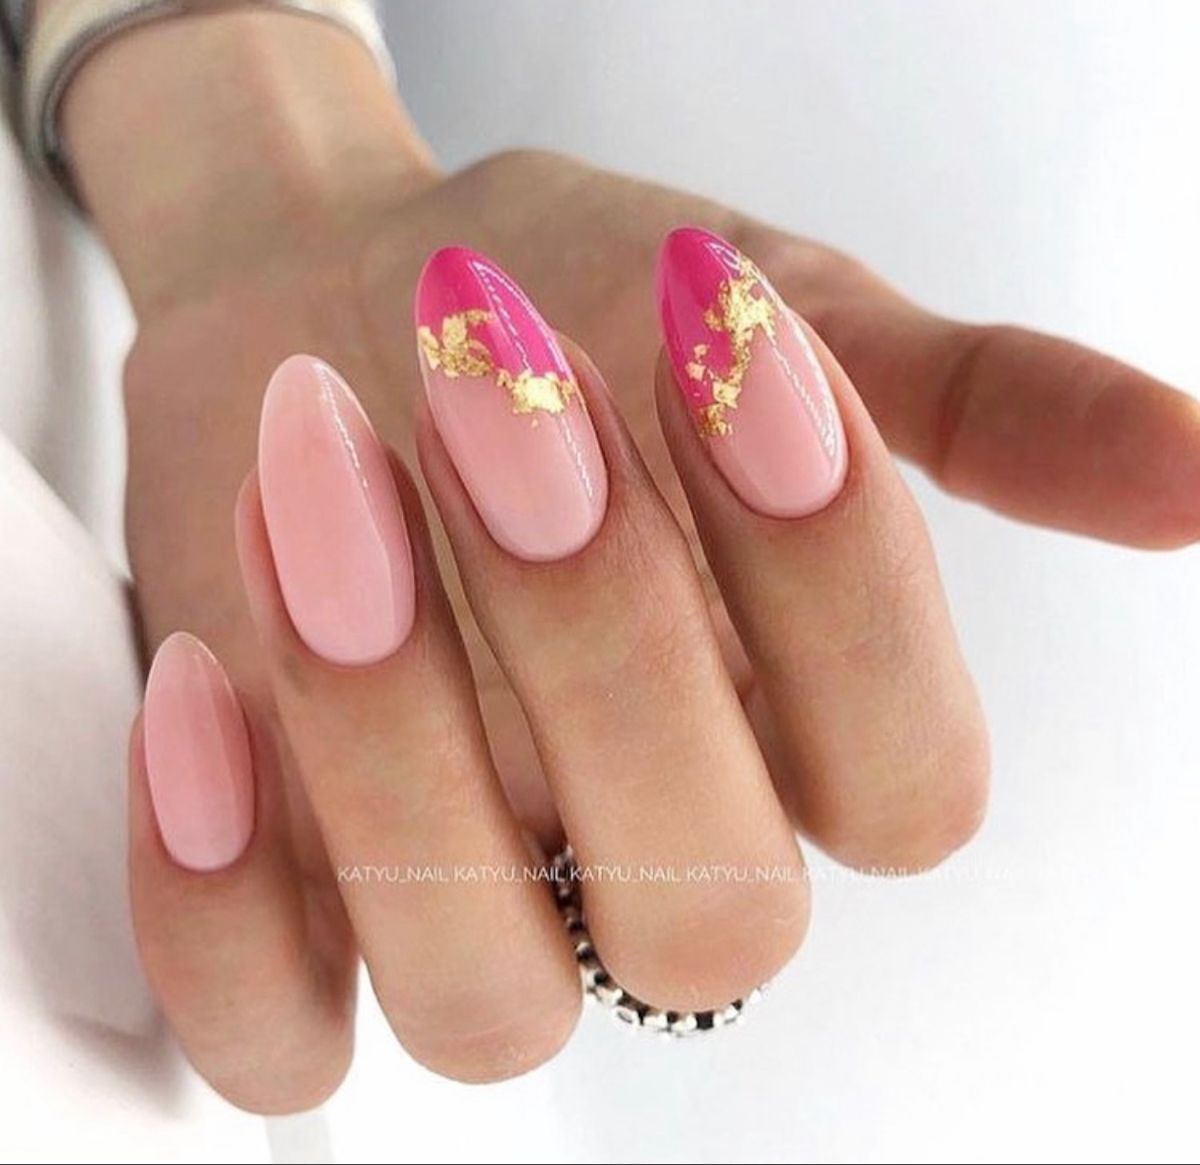 Pin By Ajuse Zizkova On Unitas In 2020 Short Acrylic Nails Stylish Nails Pink Nails